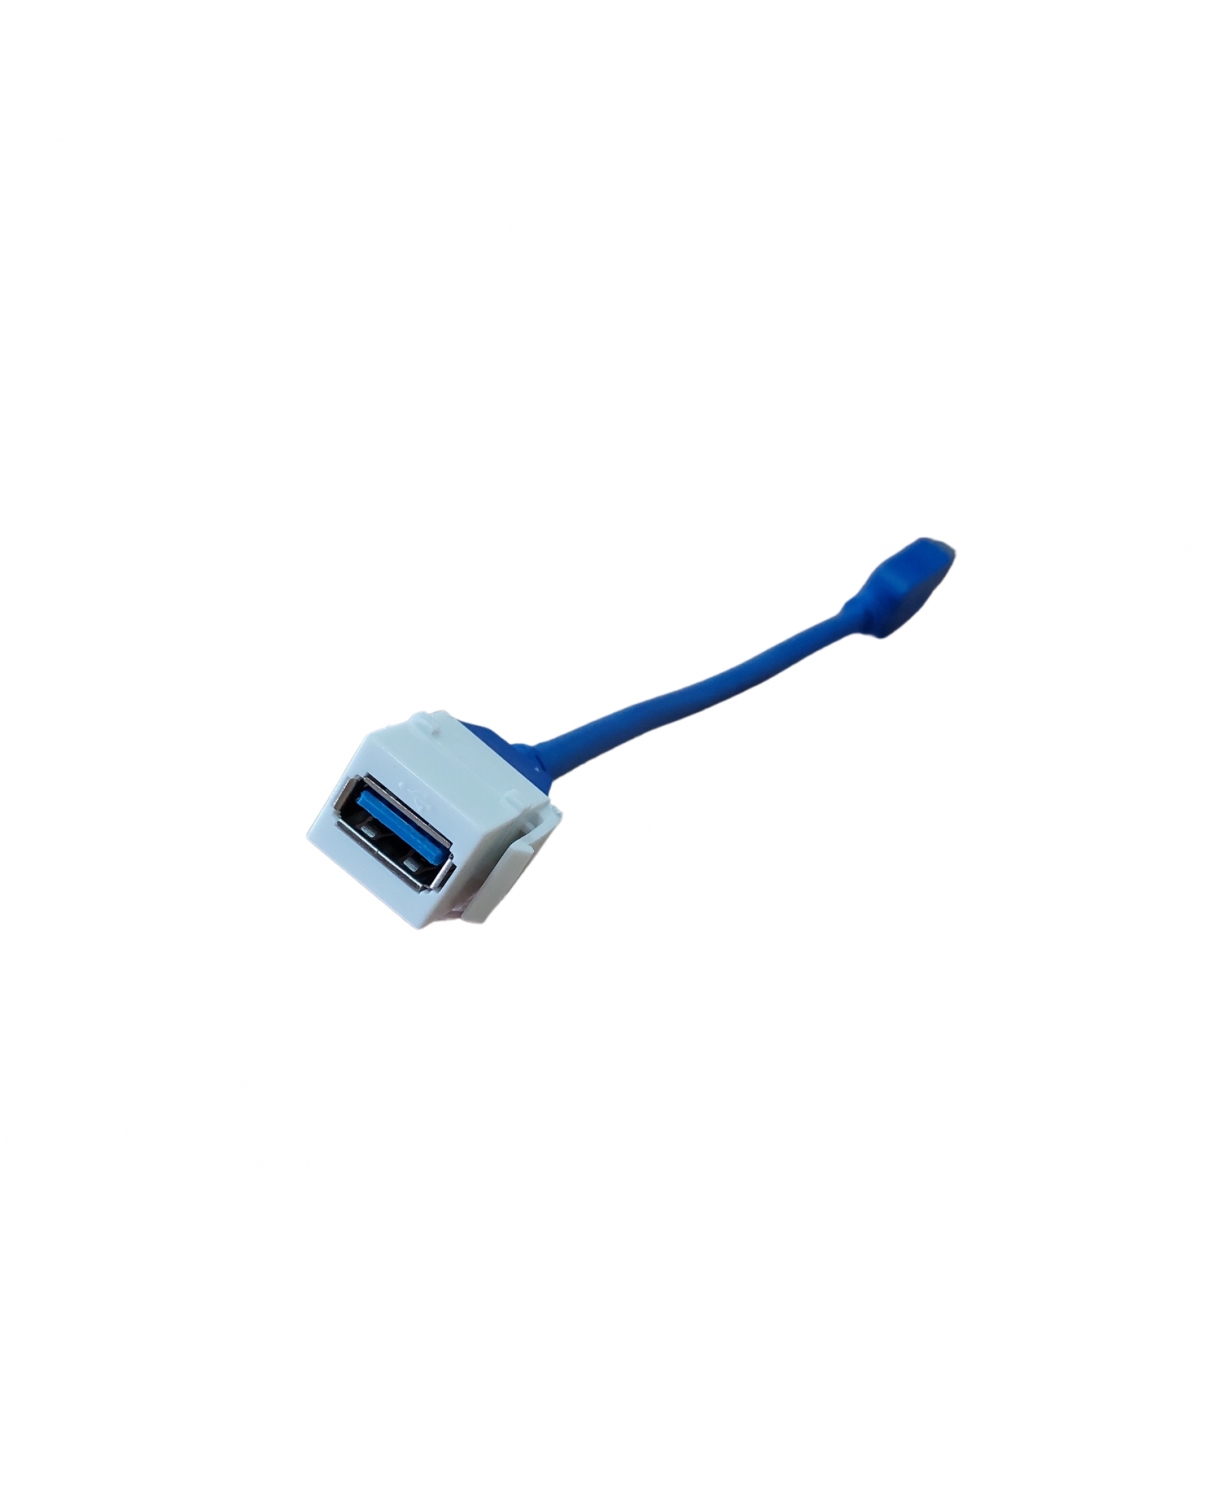 KEYSTONE USB 3.0 MOD-A EXTENSAO 10CM BR